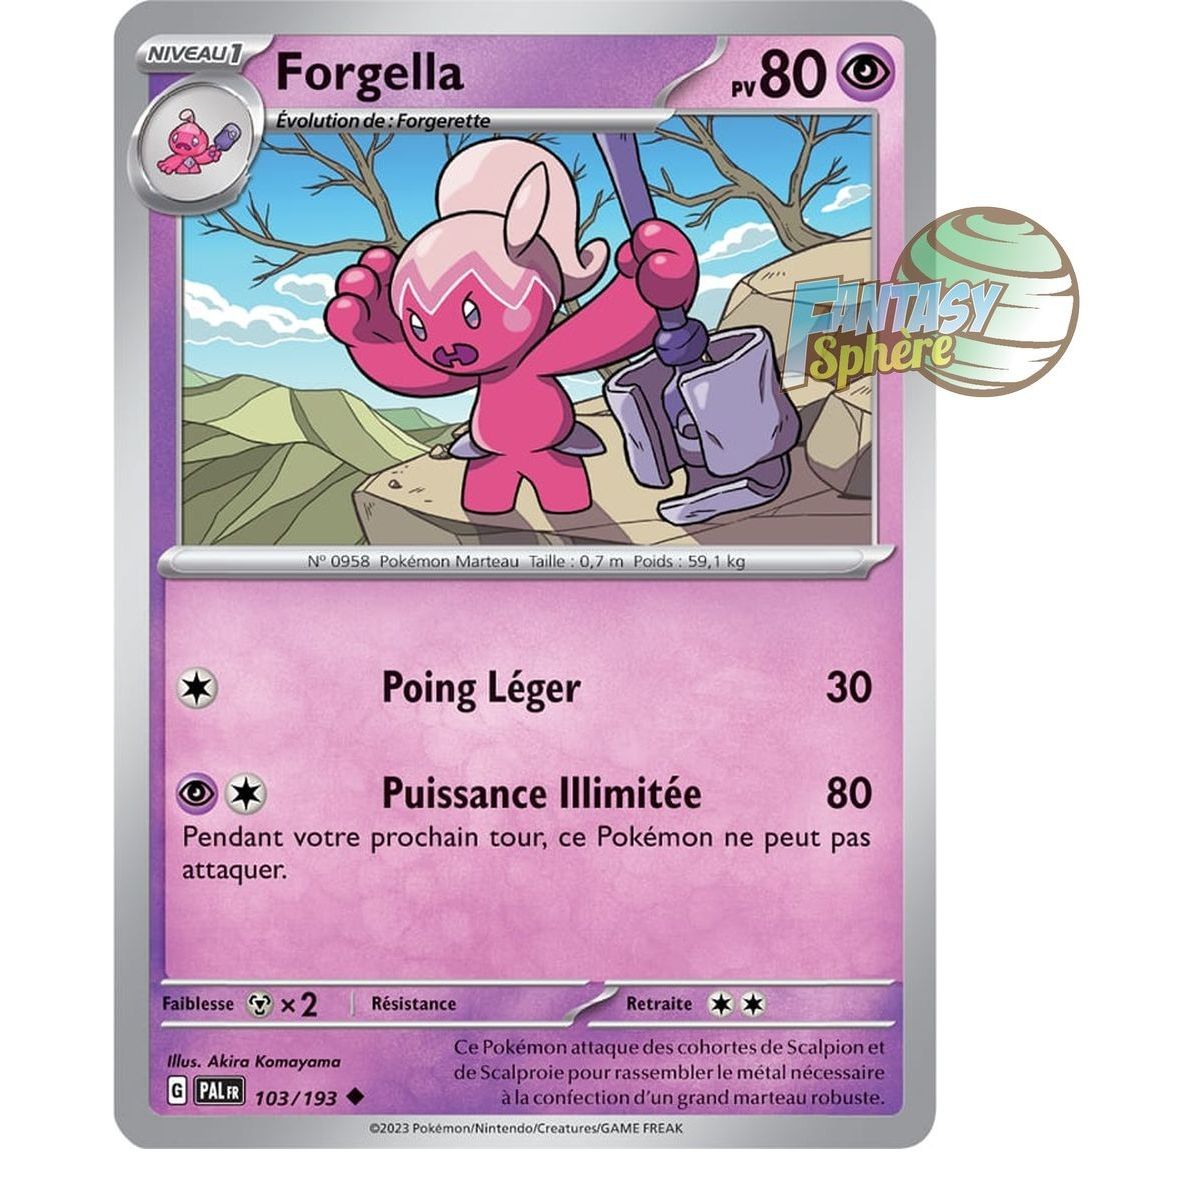 Forgella - Reverse 103/193 - Scarlet and Violet Evolution in Paldea